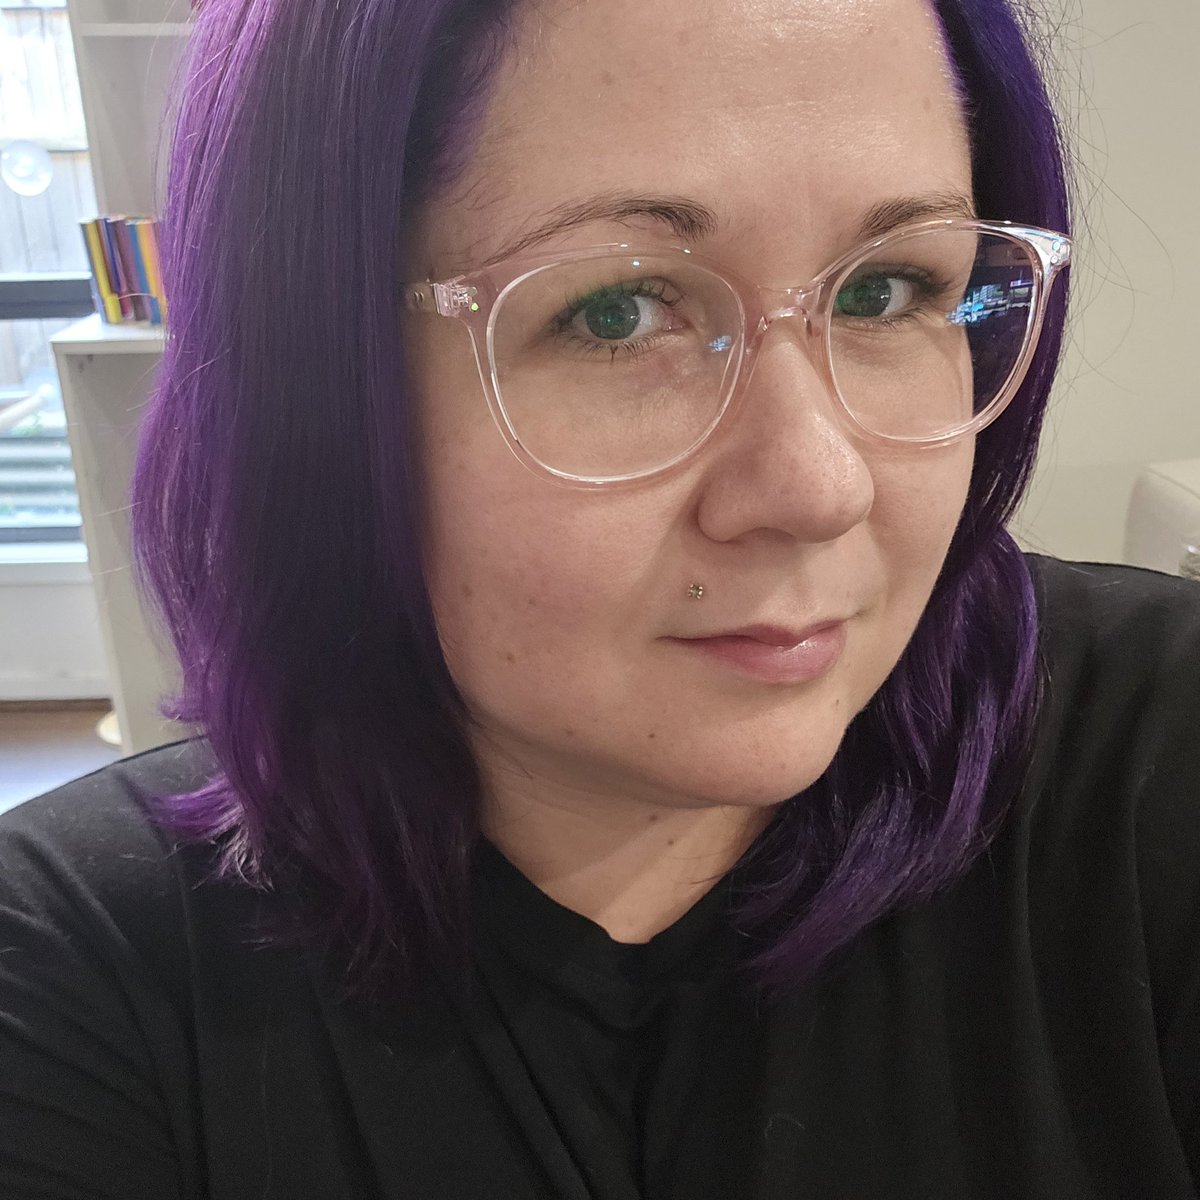 Fresh purple hair means a rare face reveal... 💜 #meetthemaker